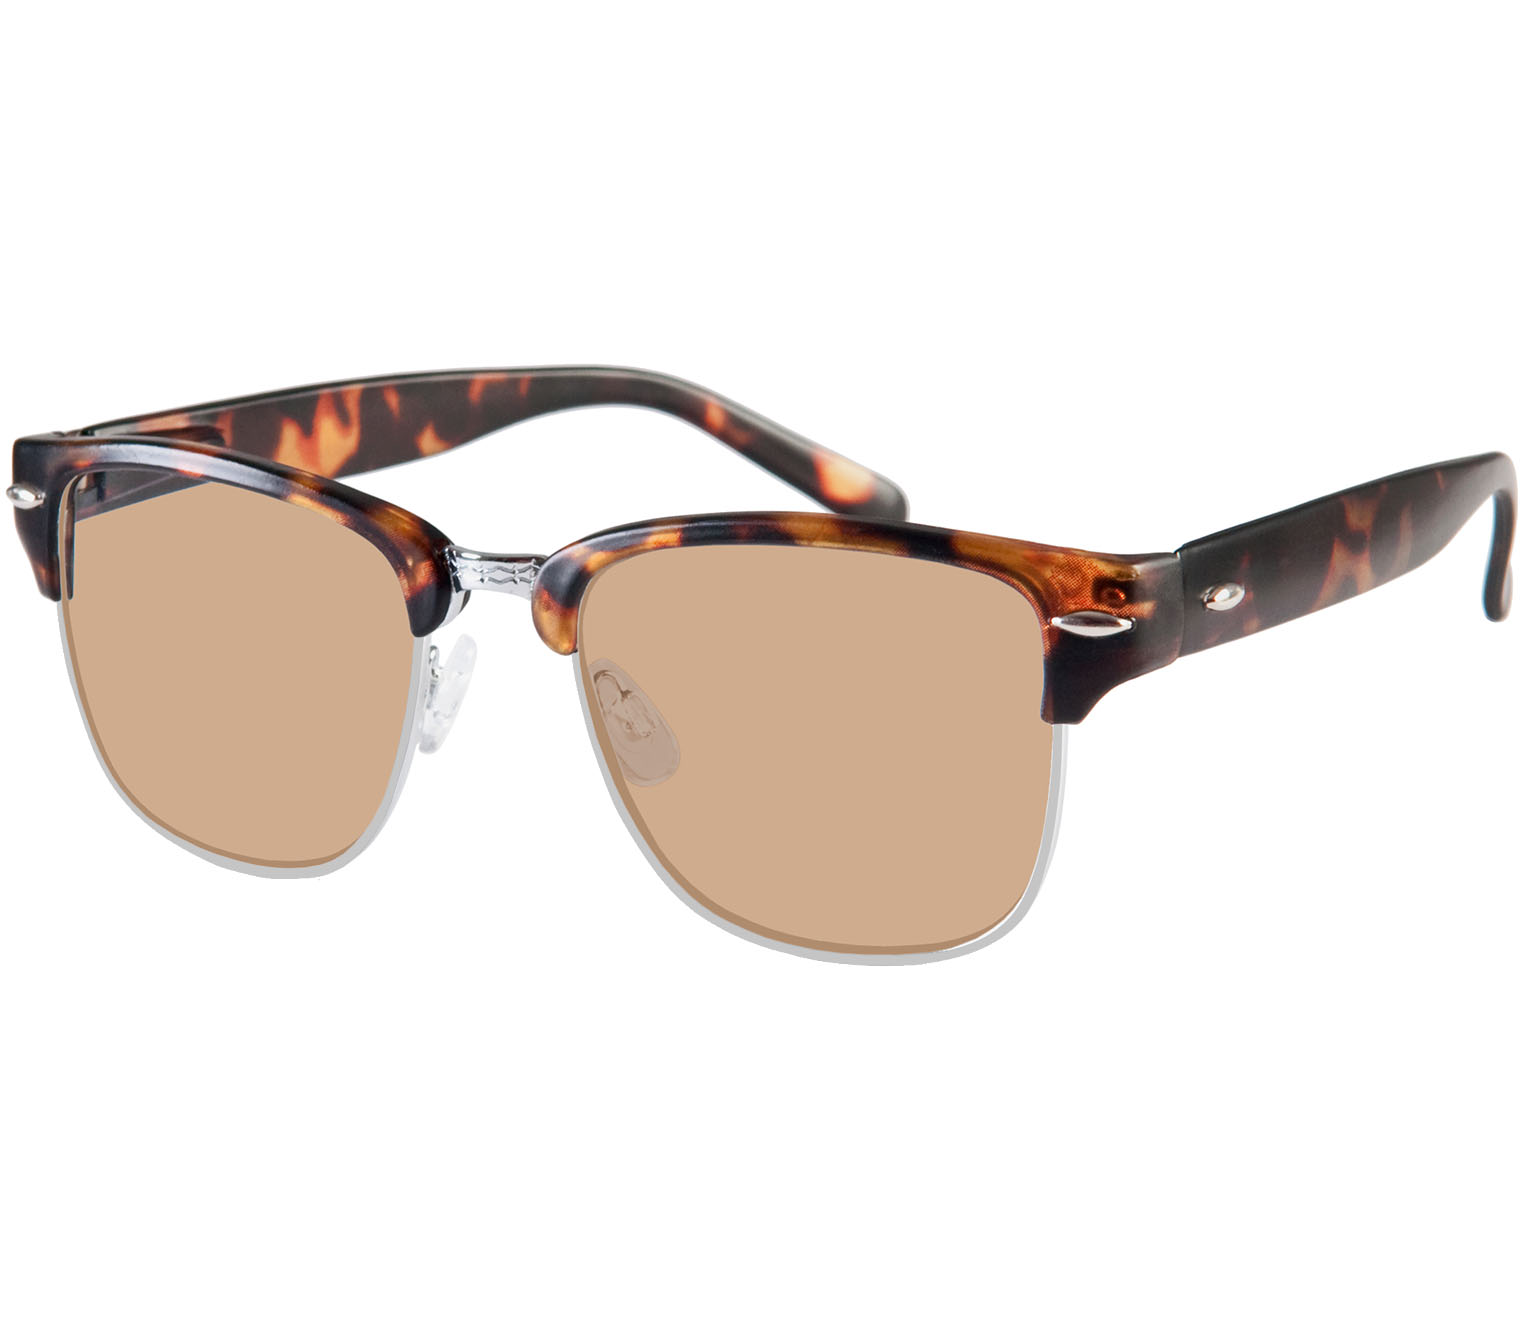 Main Image (Angle) - Capital (Tortoiseshell) Retro Sunglasses